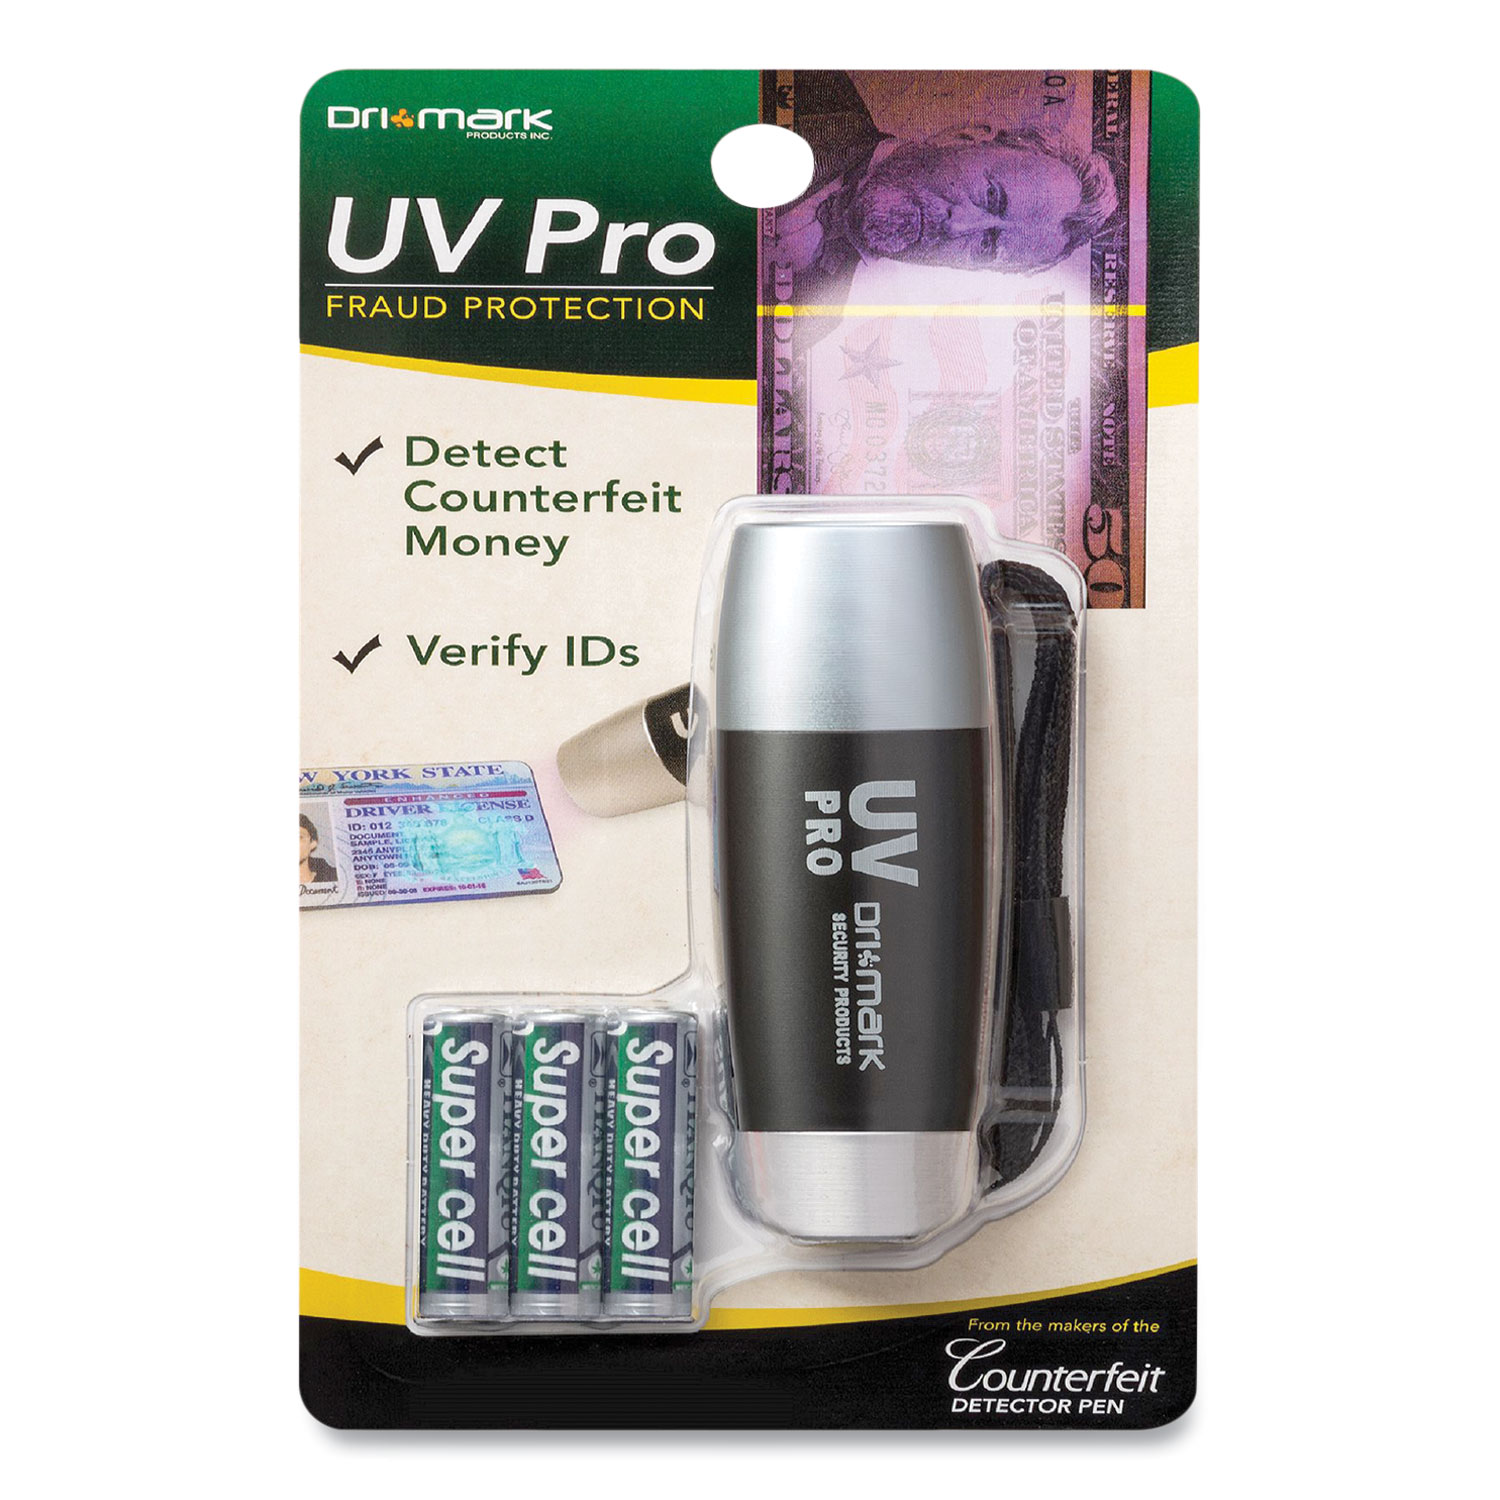  Dri-Mark UVPROPLUS-B UV Pro Ultraviolet Counterfeit Detector with Batteries, Black/Silver (DRI2115943) 